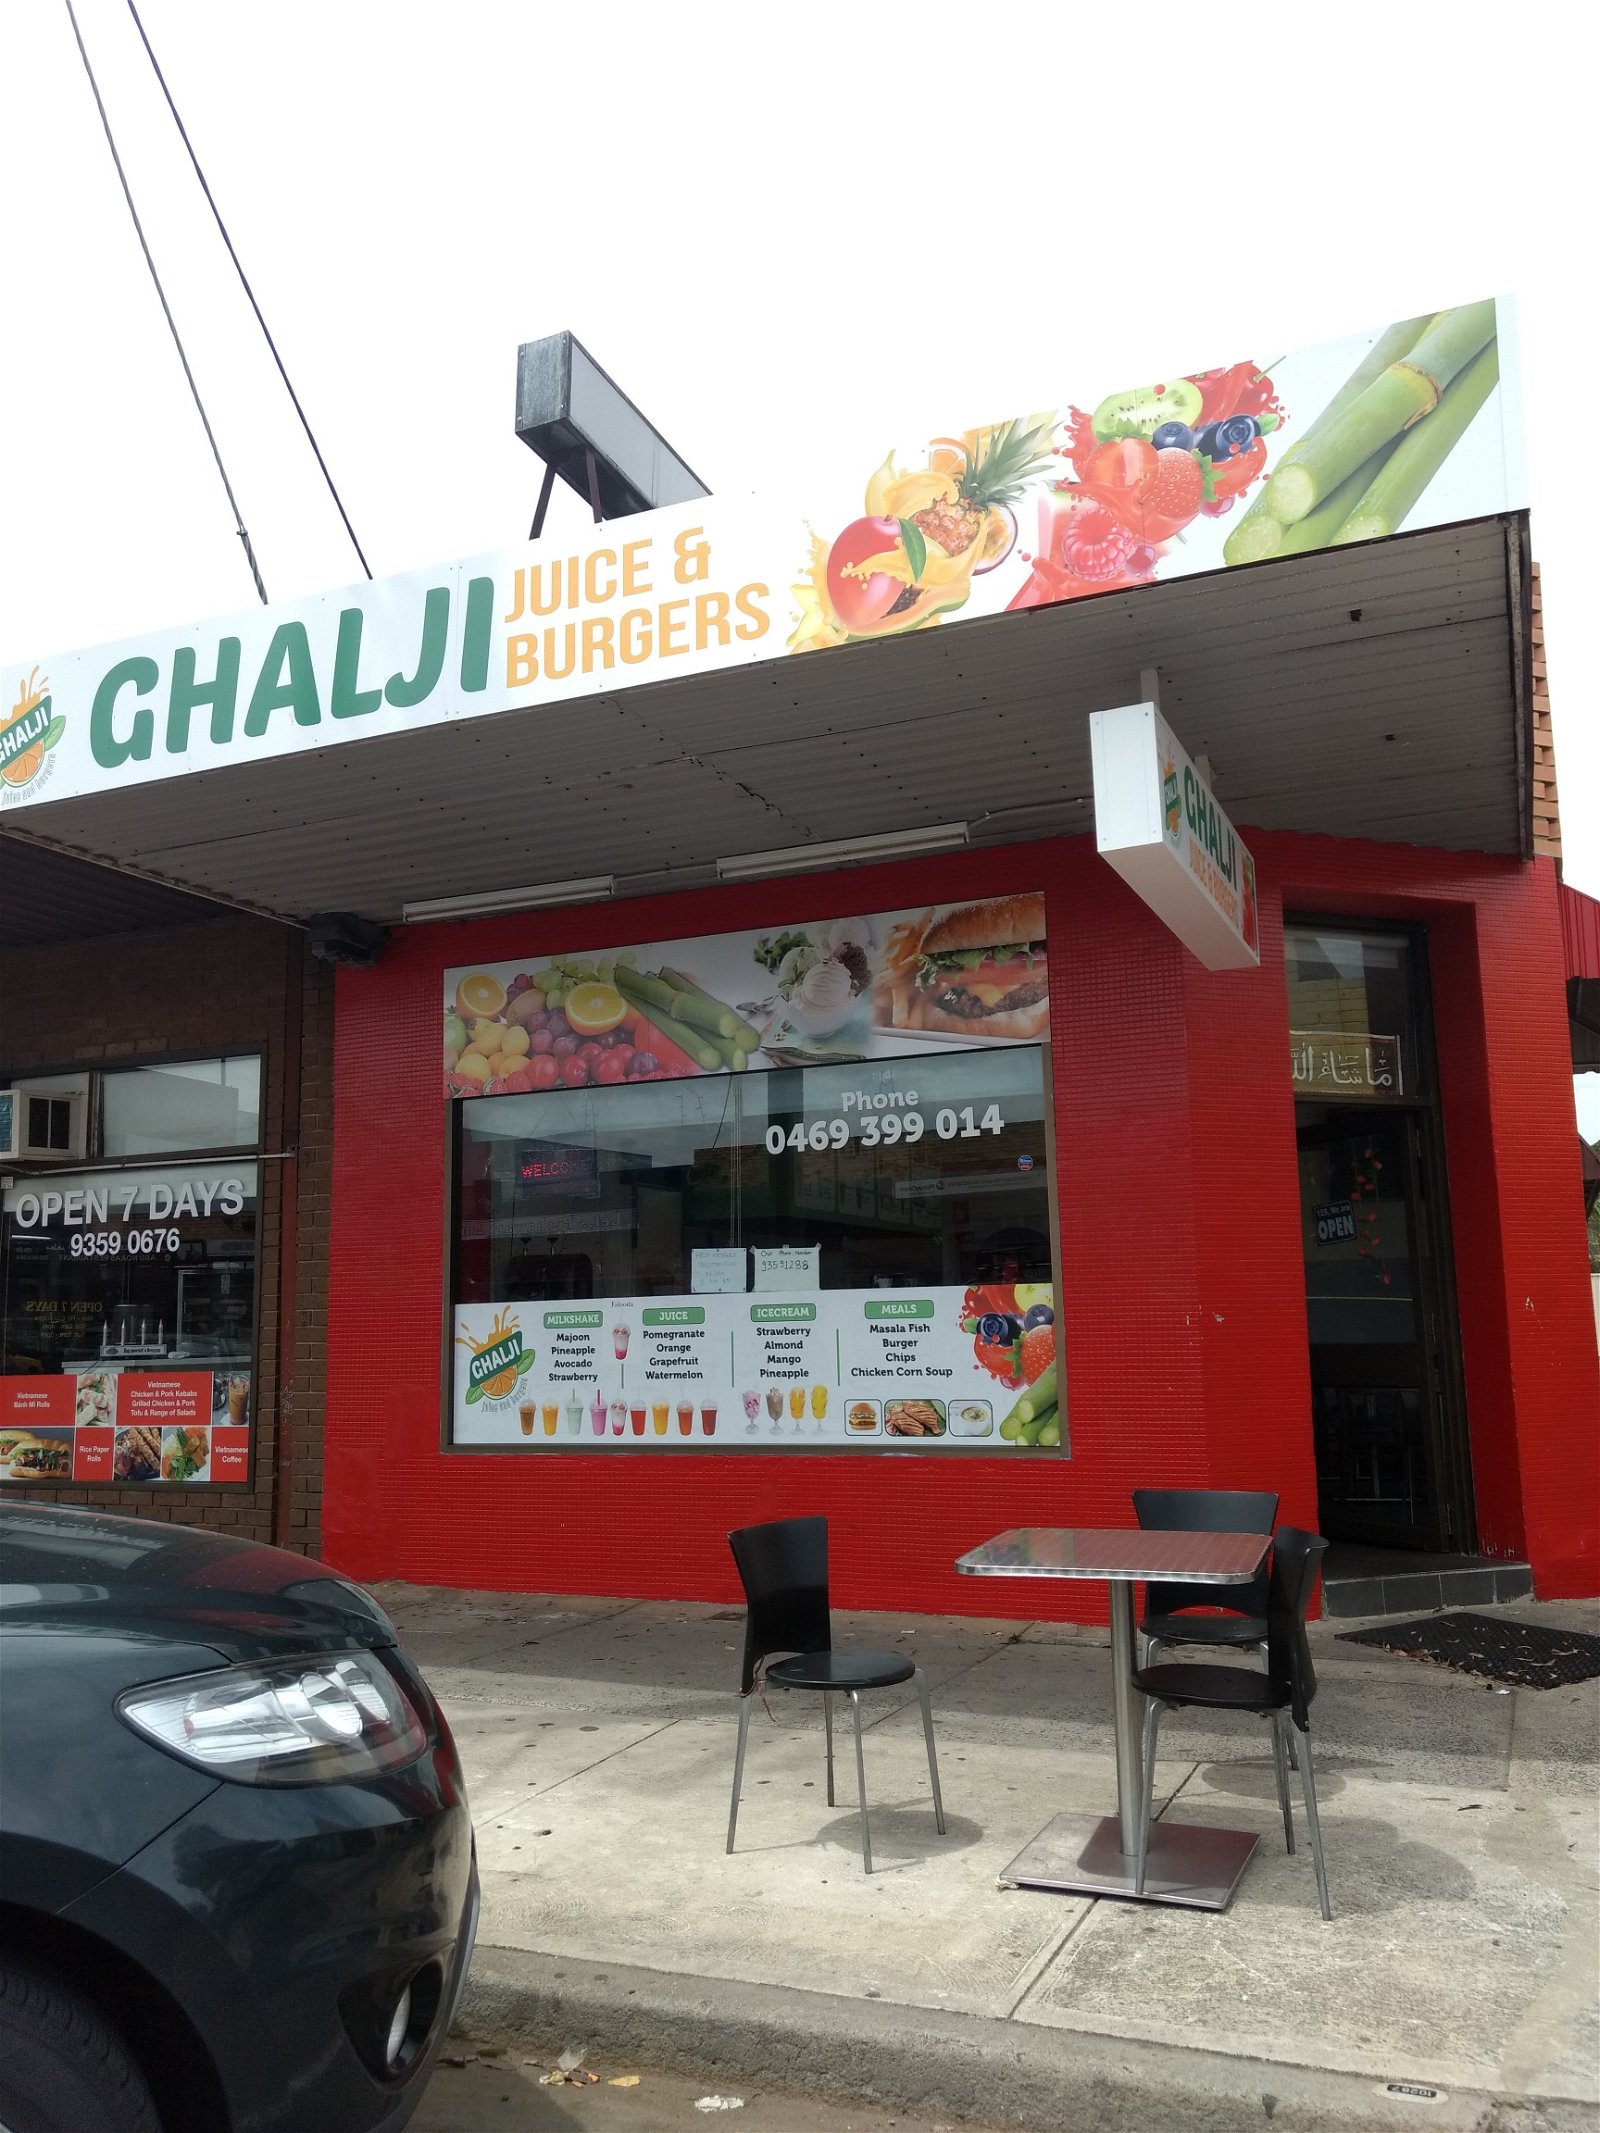 Ghalji Juice  Burgers - Broome Tourism